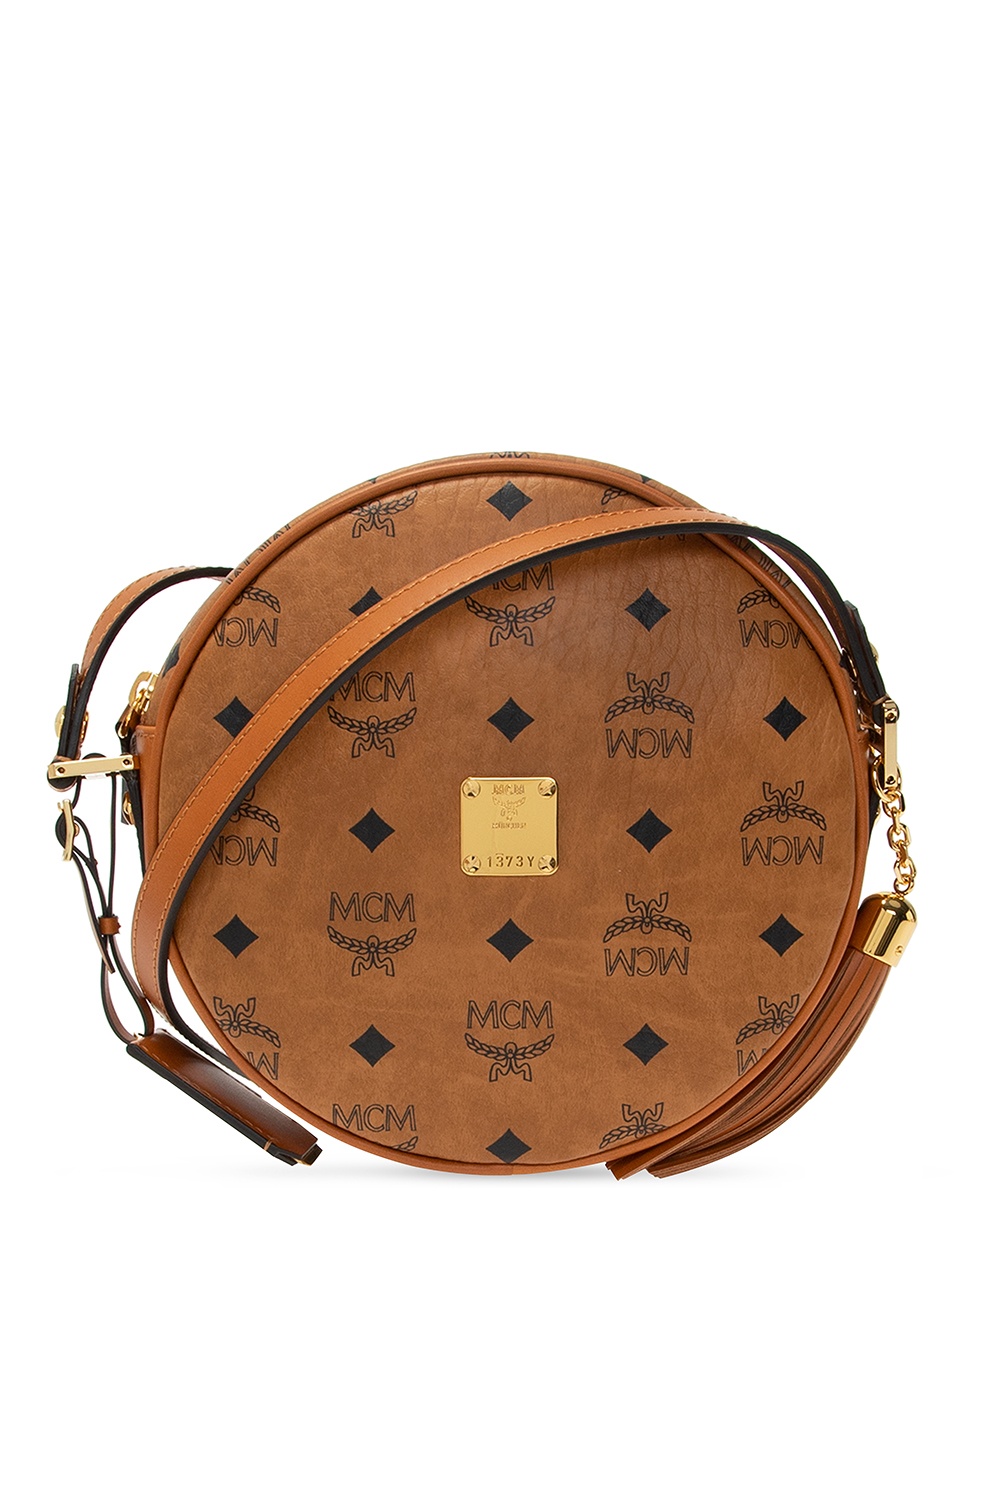 Louis Vuitton Tambourine Canvas Shoulder Bag (pre-owned) in Orange